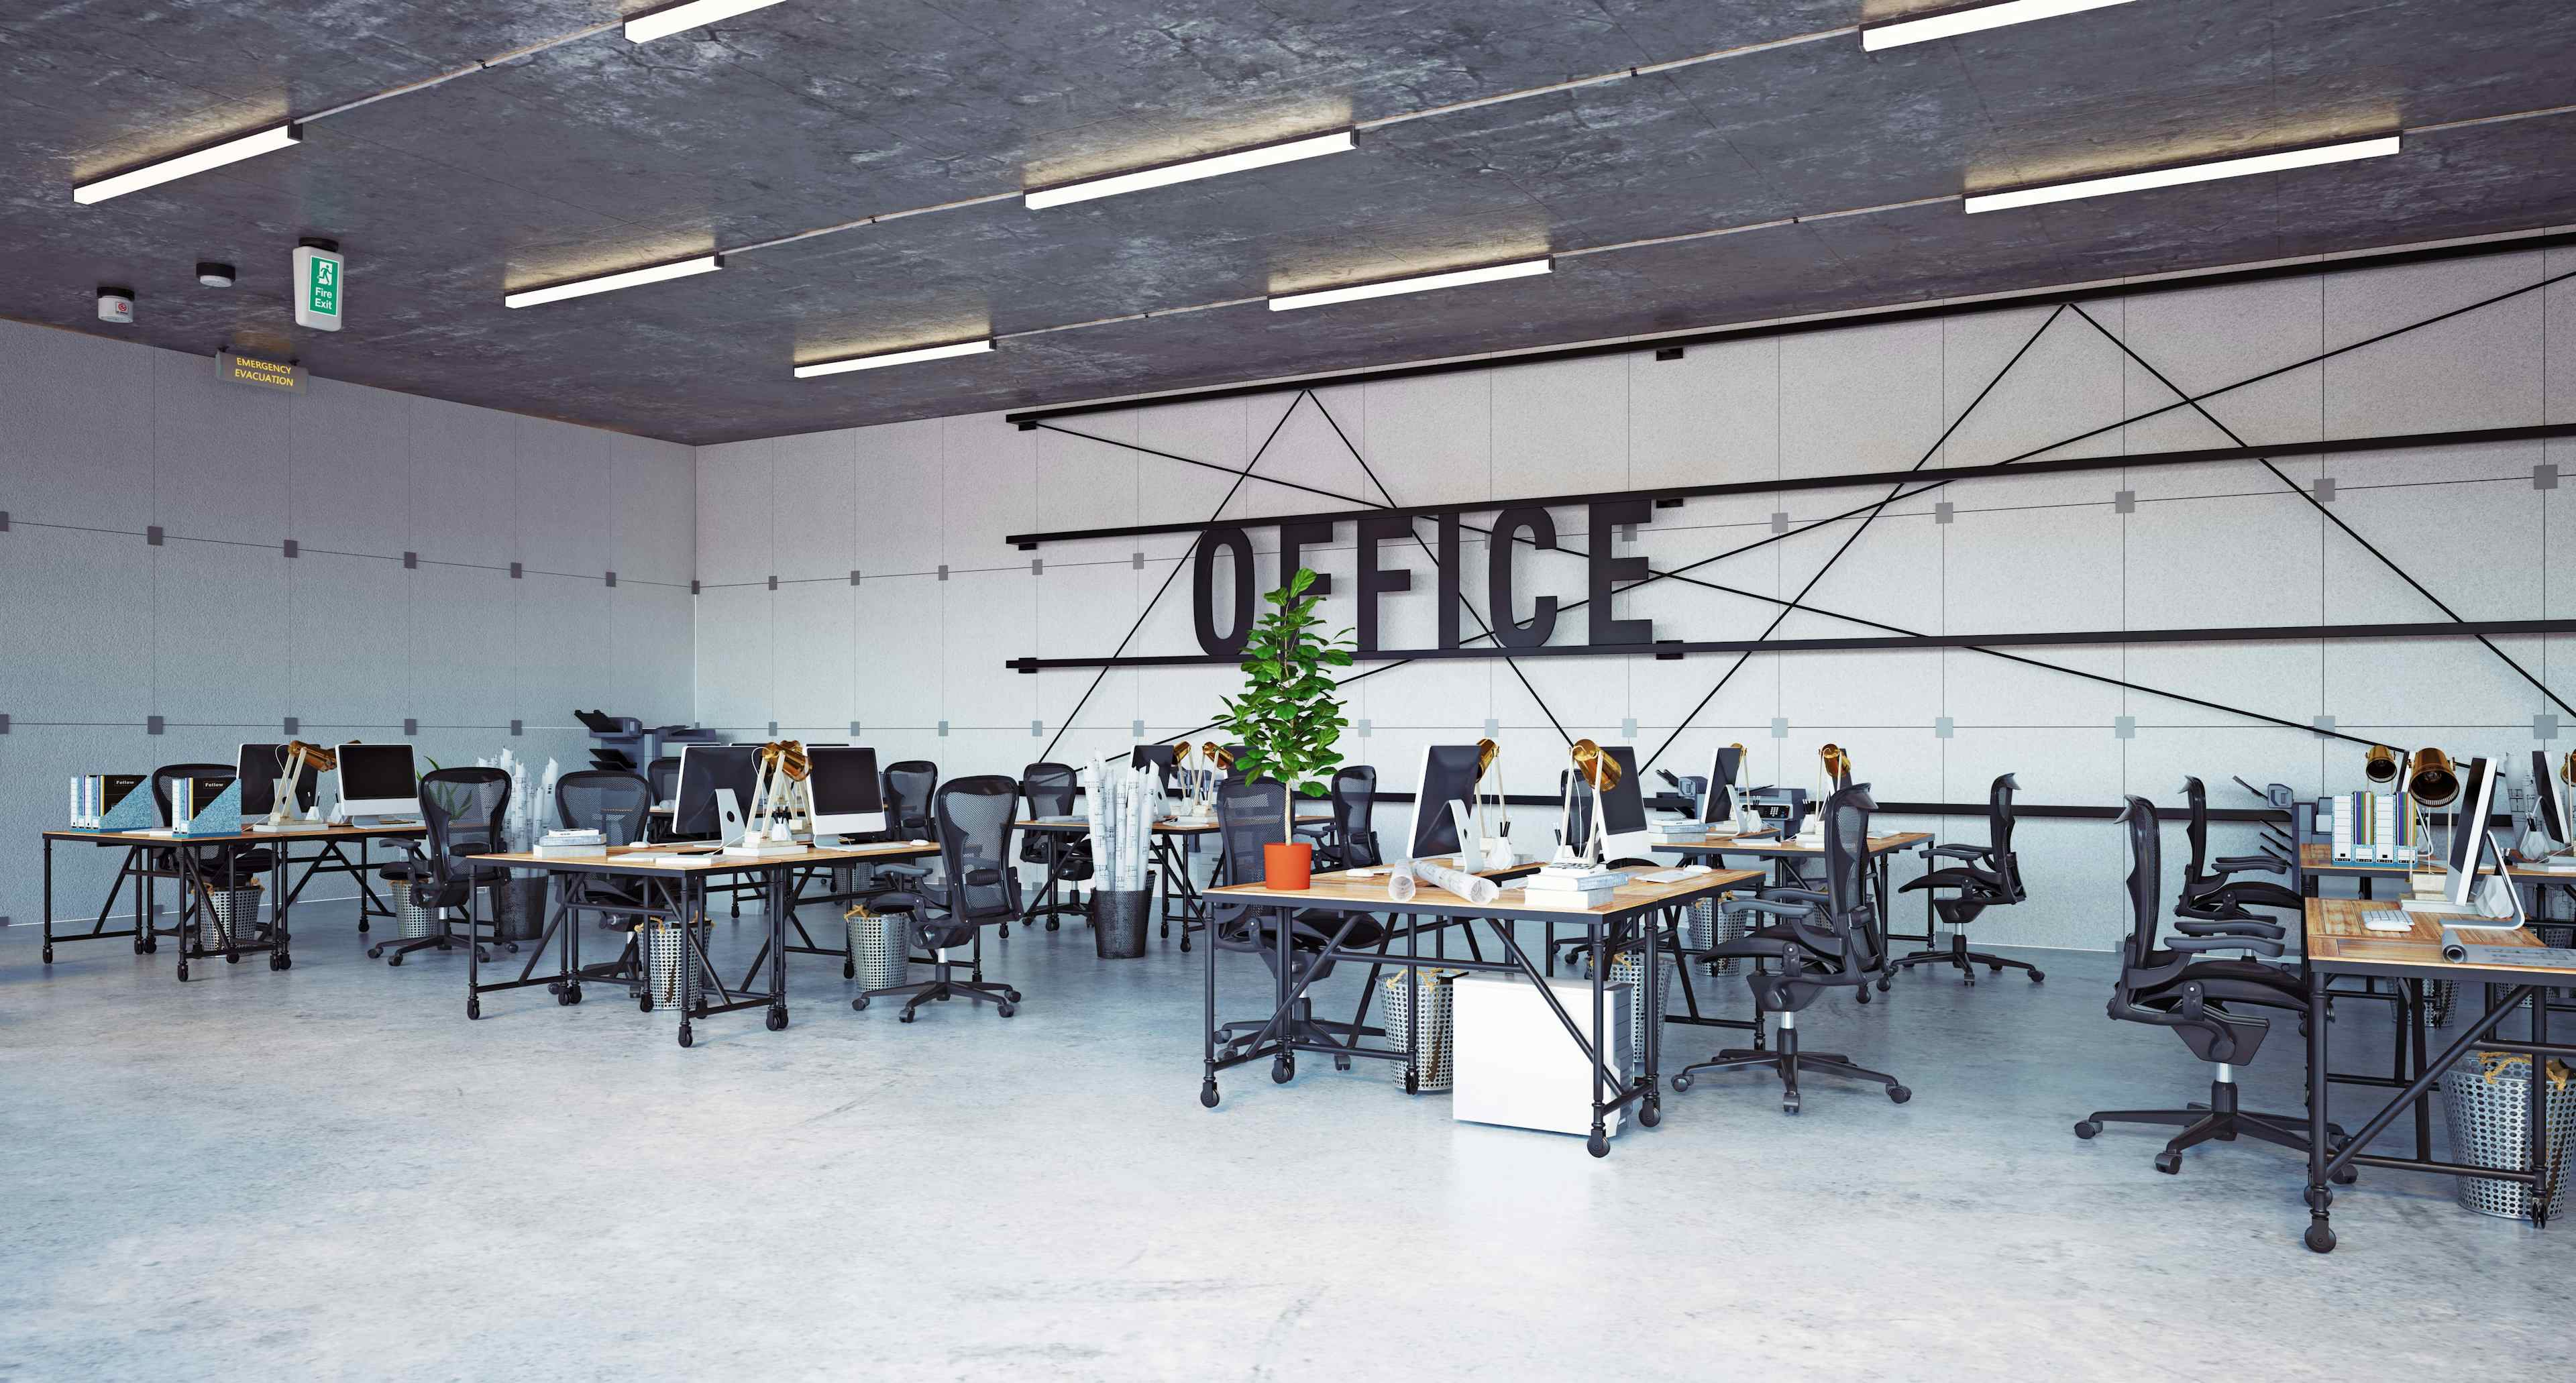 Modern Office Interior